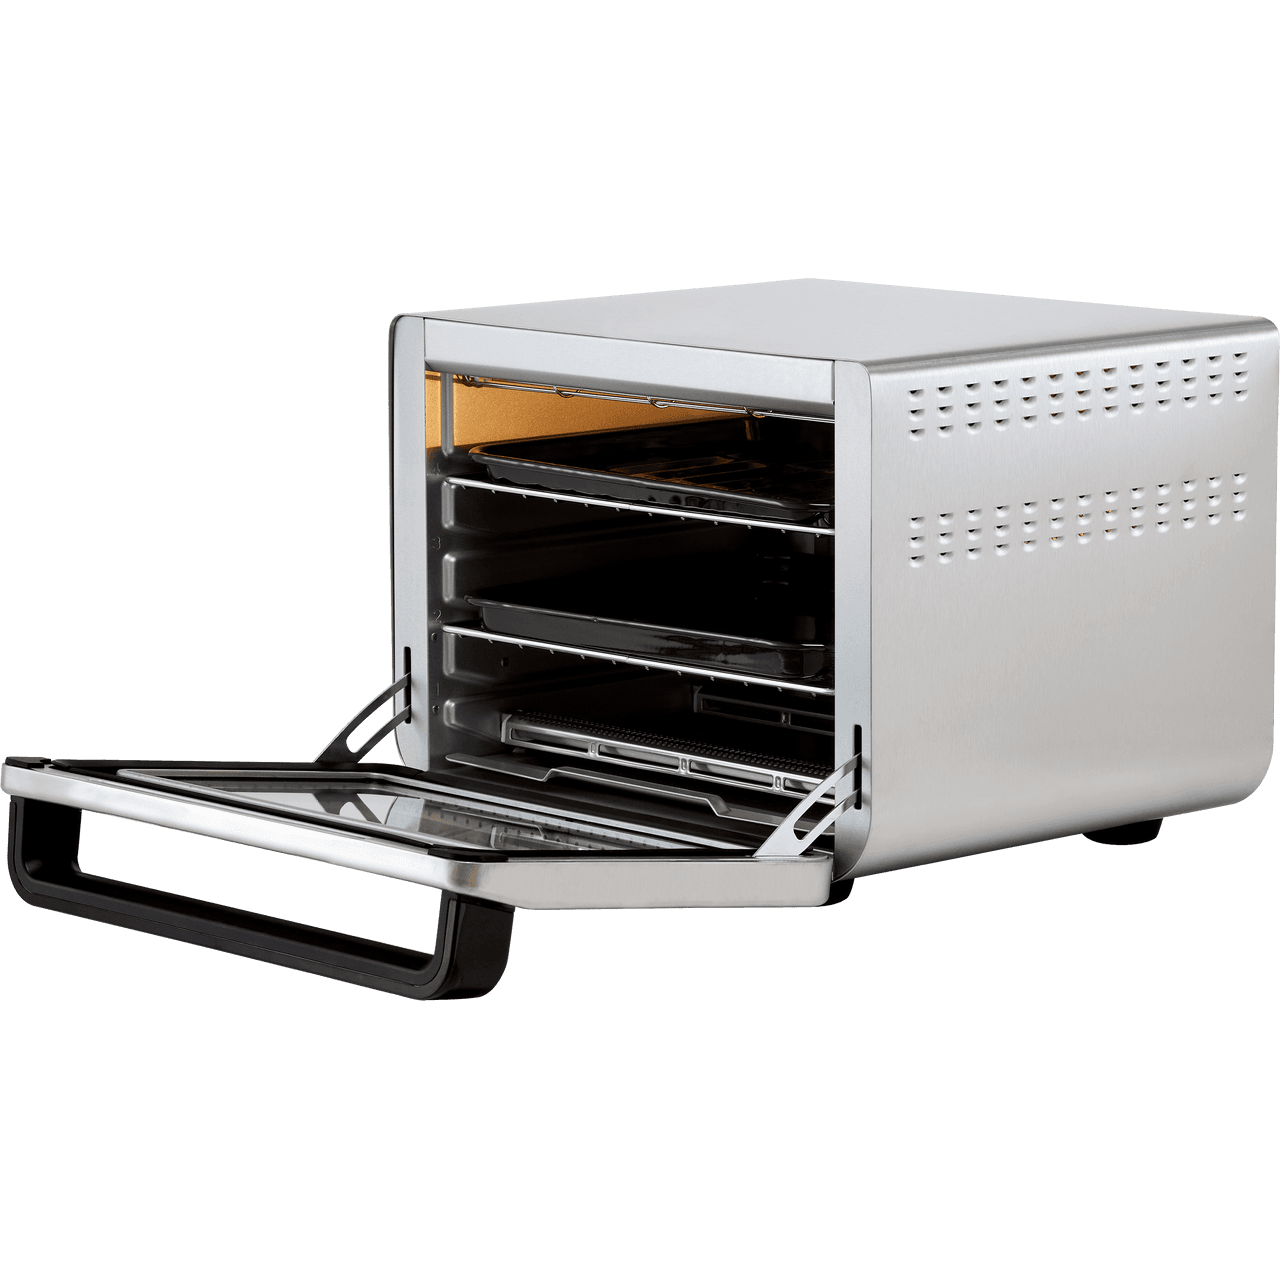 Ninja Foodi 10-in-1 Multifunction Oven [DT200UK] Mini Oven